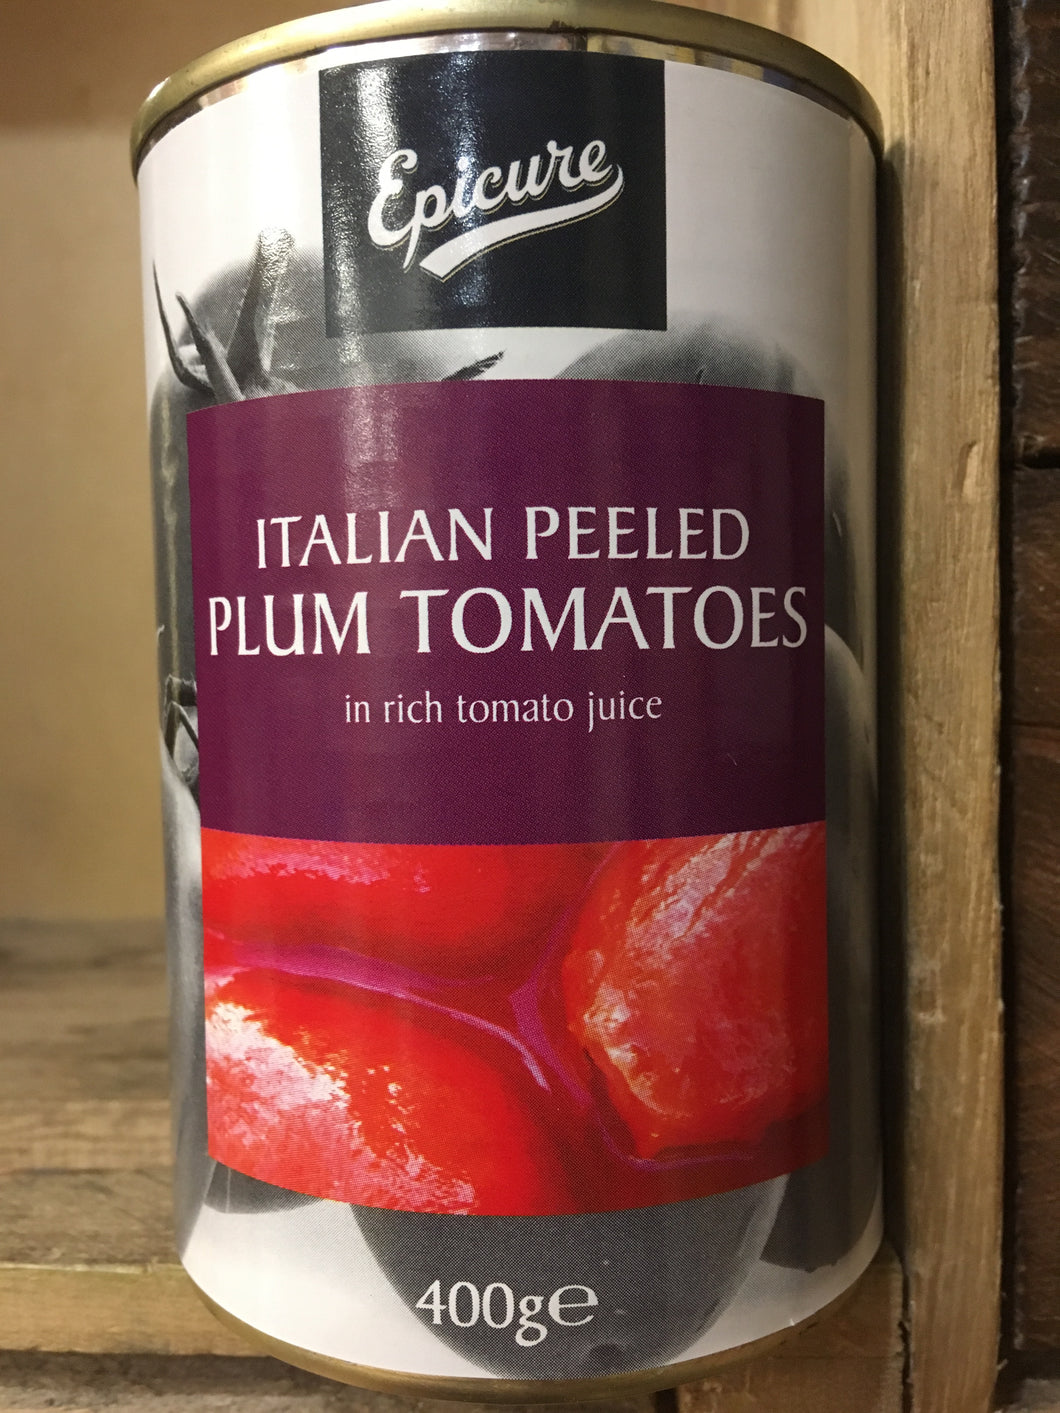 Epicure Italian Peeled Plum Tomatoes 400g